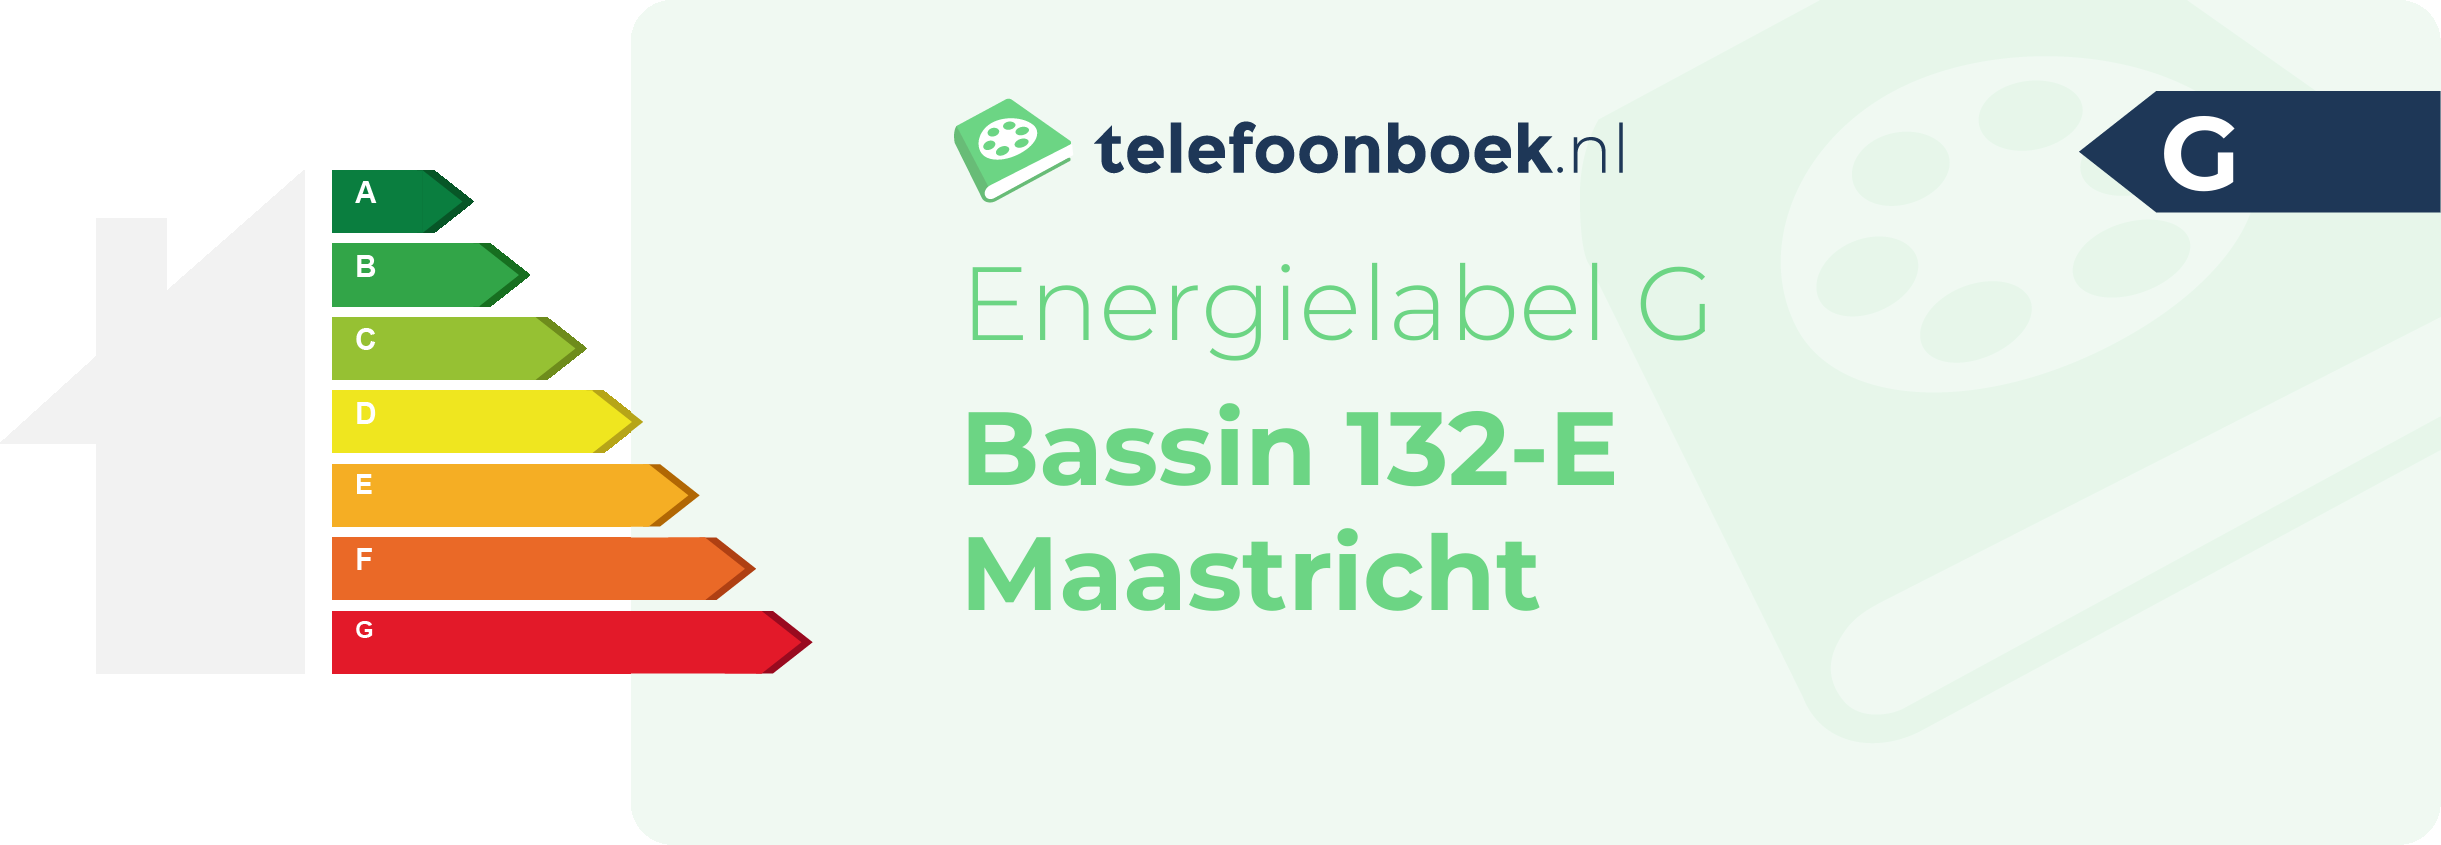 Energielabel Bassin 132-E Maastricht